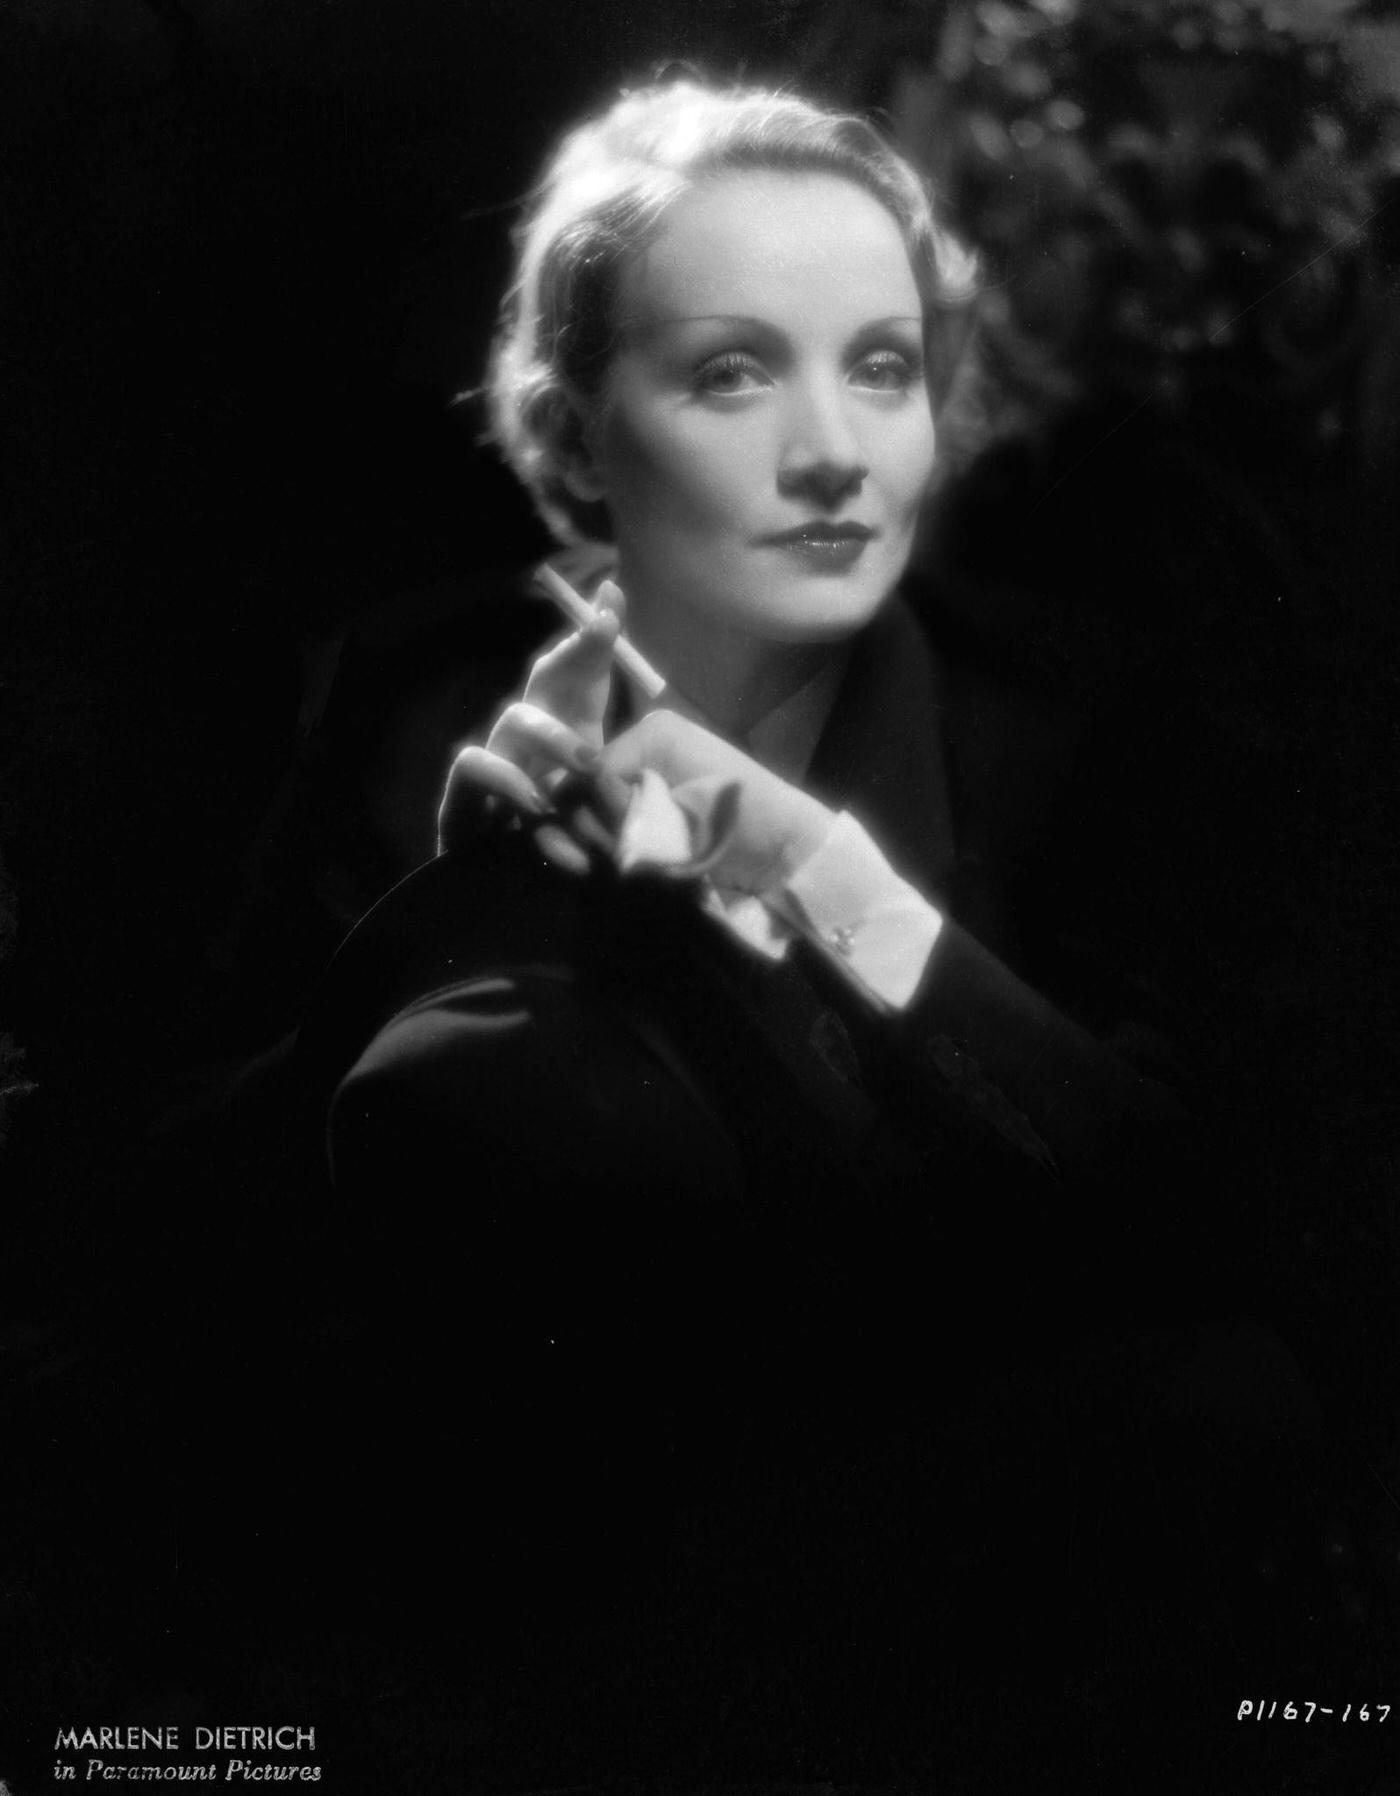 A photograph of Marlene Dietrich smoking.